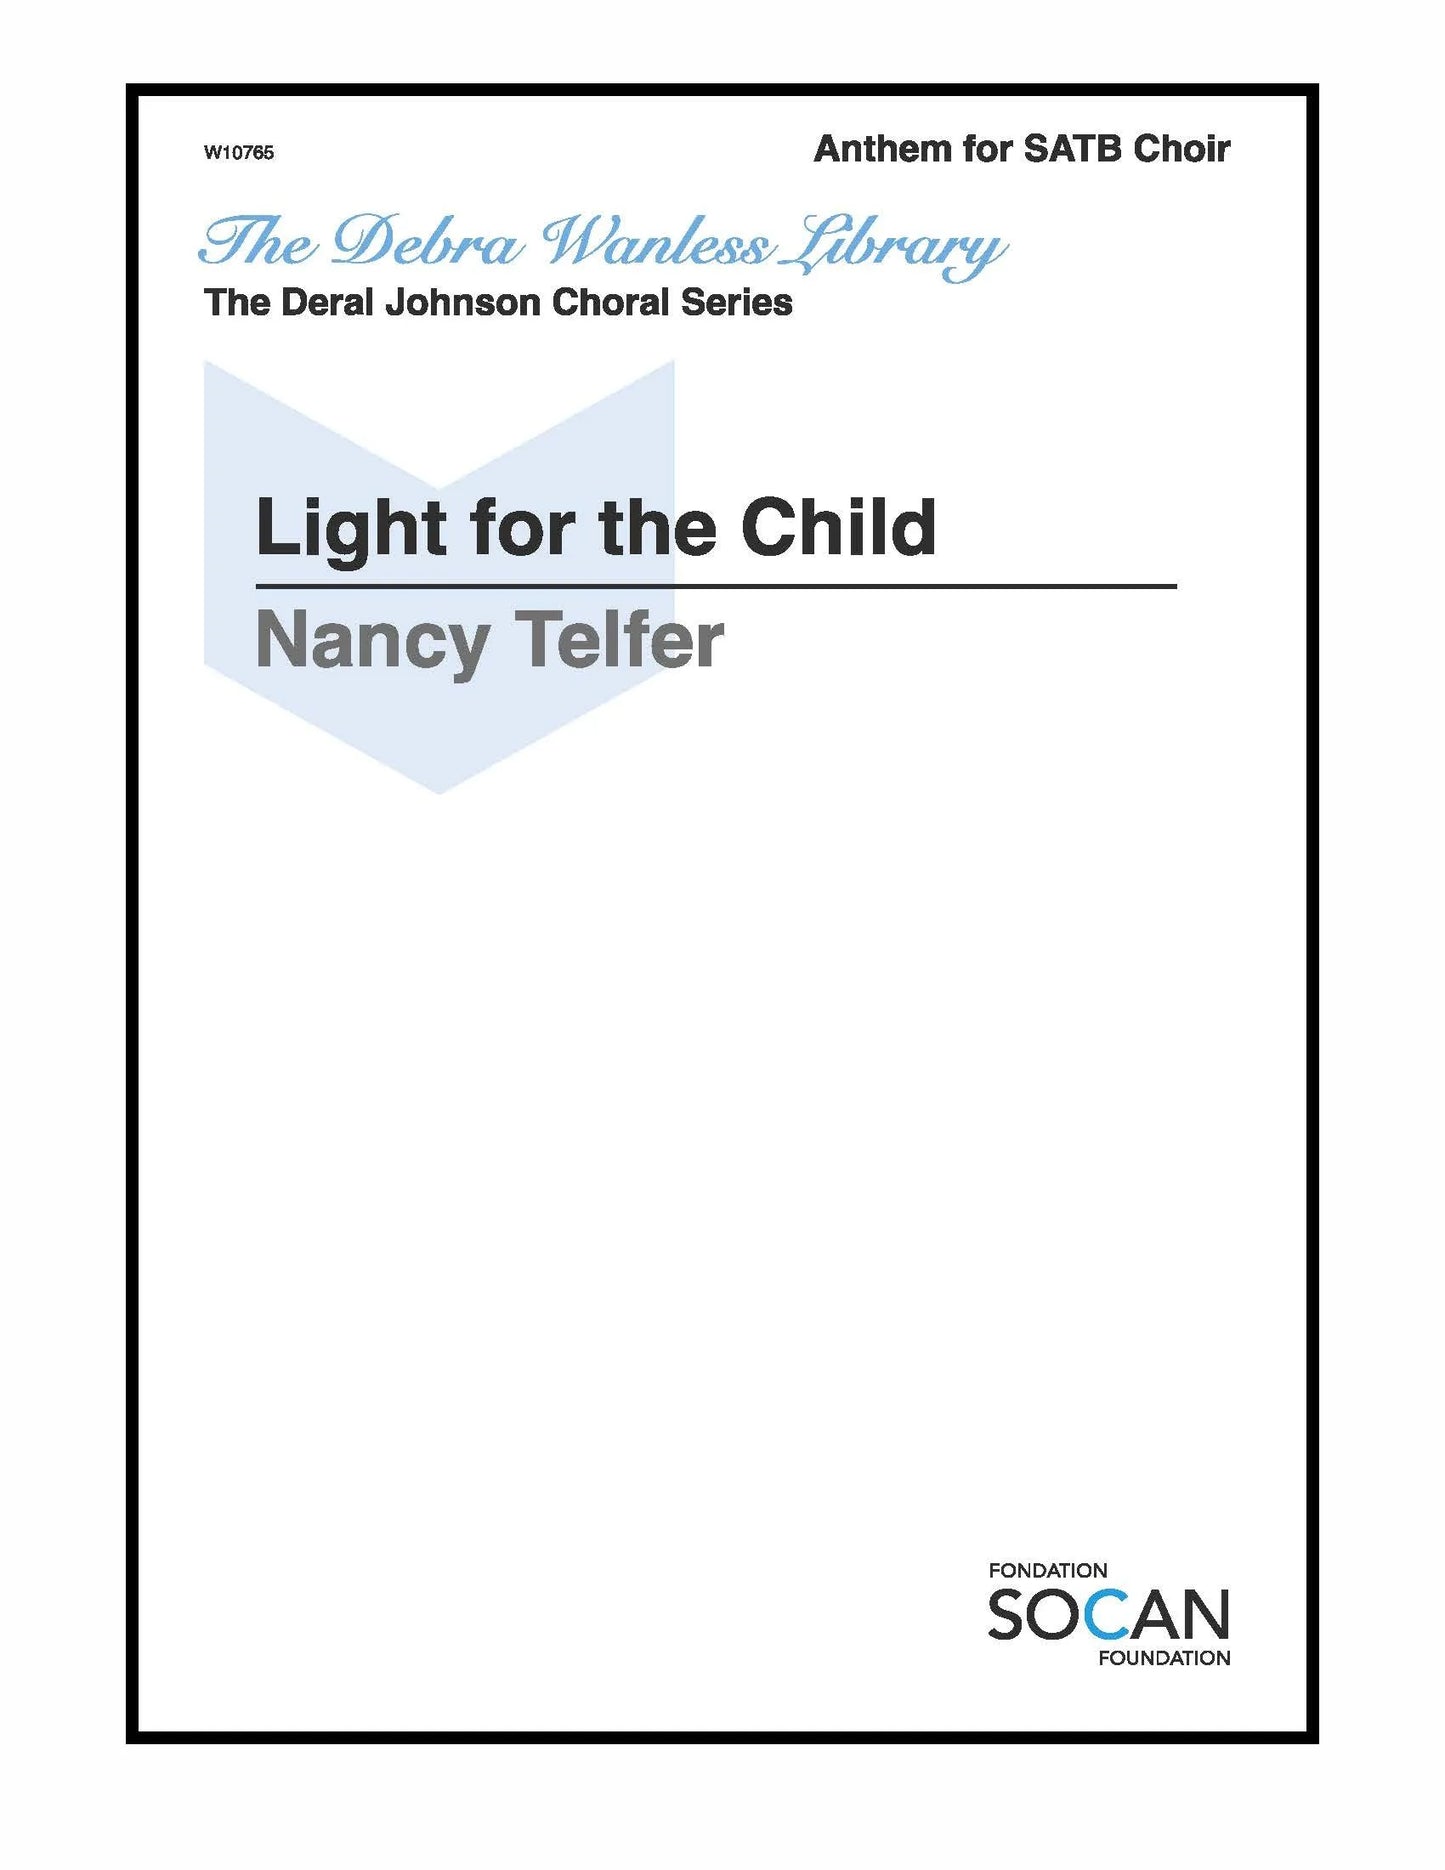 Light for the Child